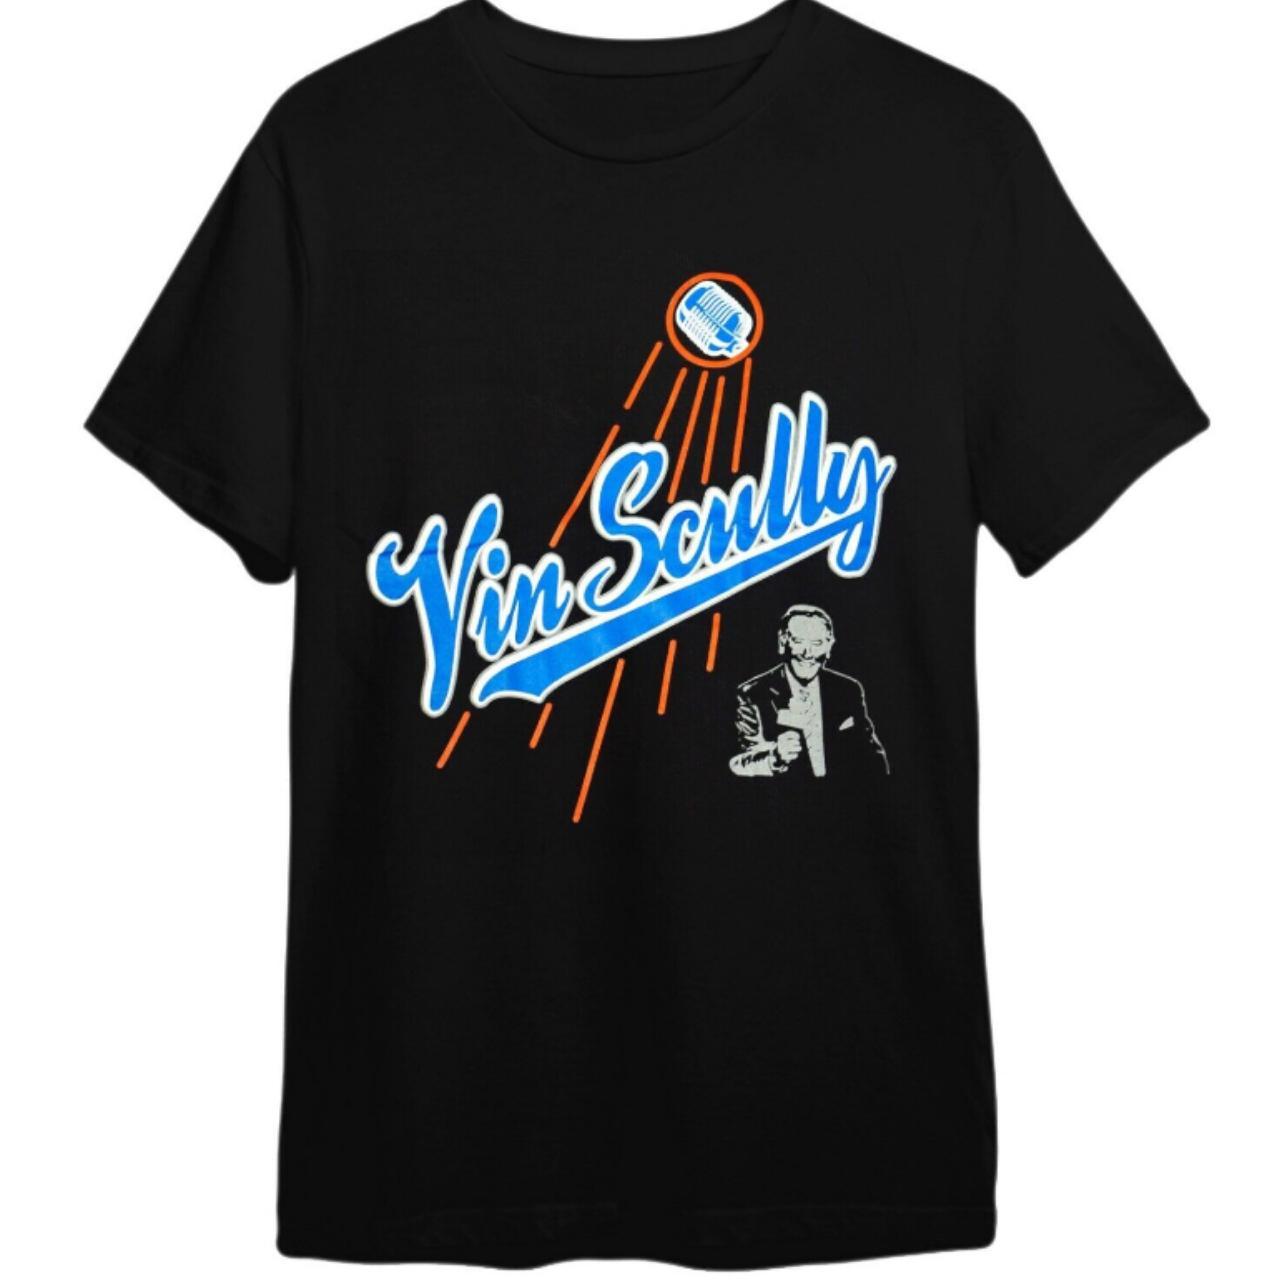 RIP Vin Scully Dodgers Baseball LA Tee Shirt